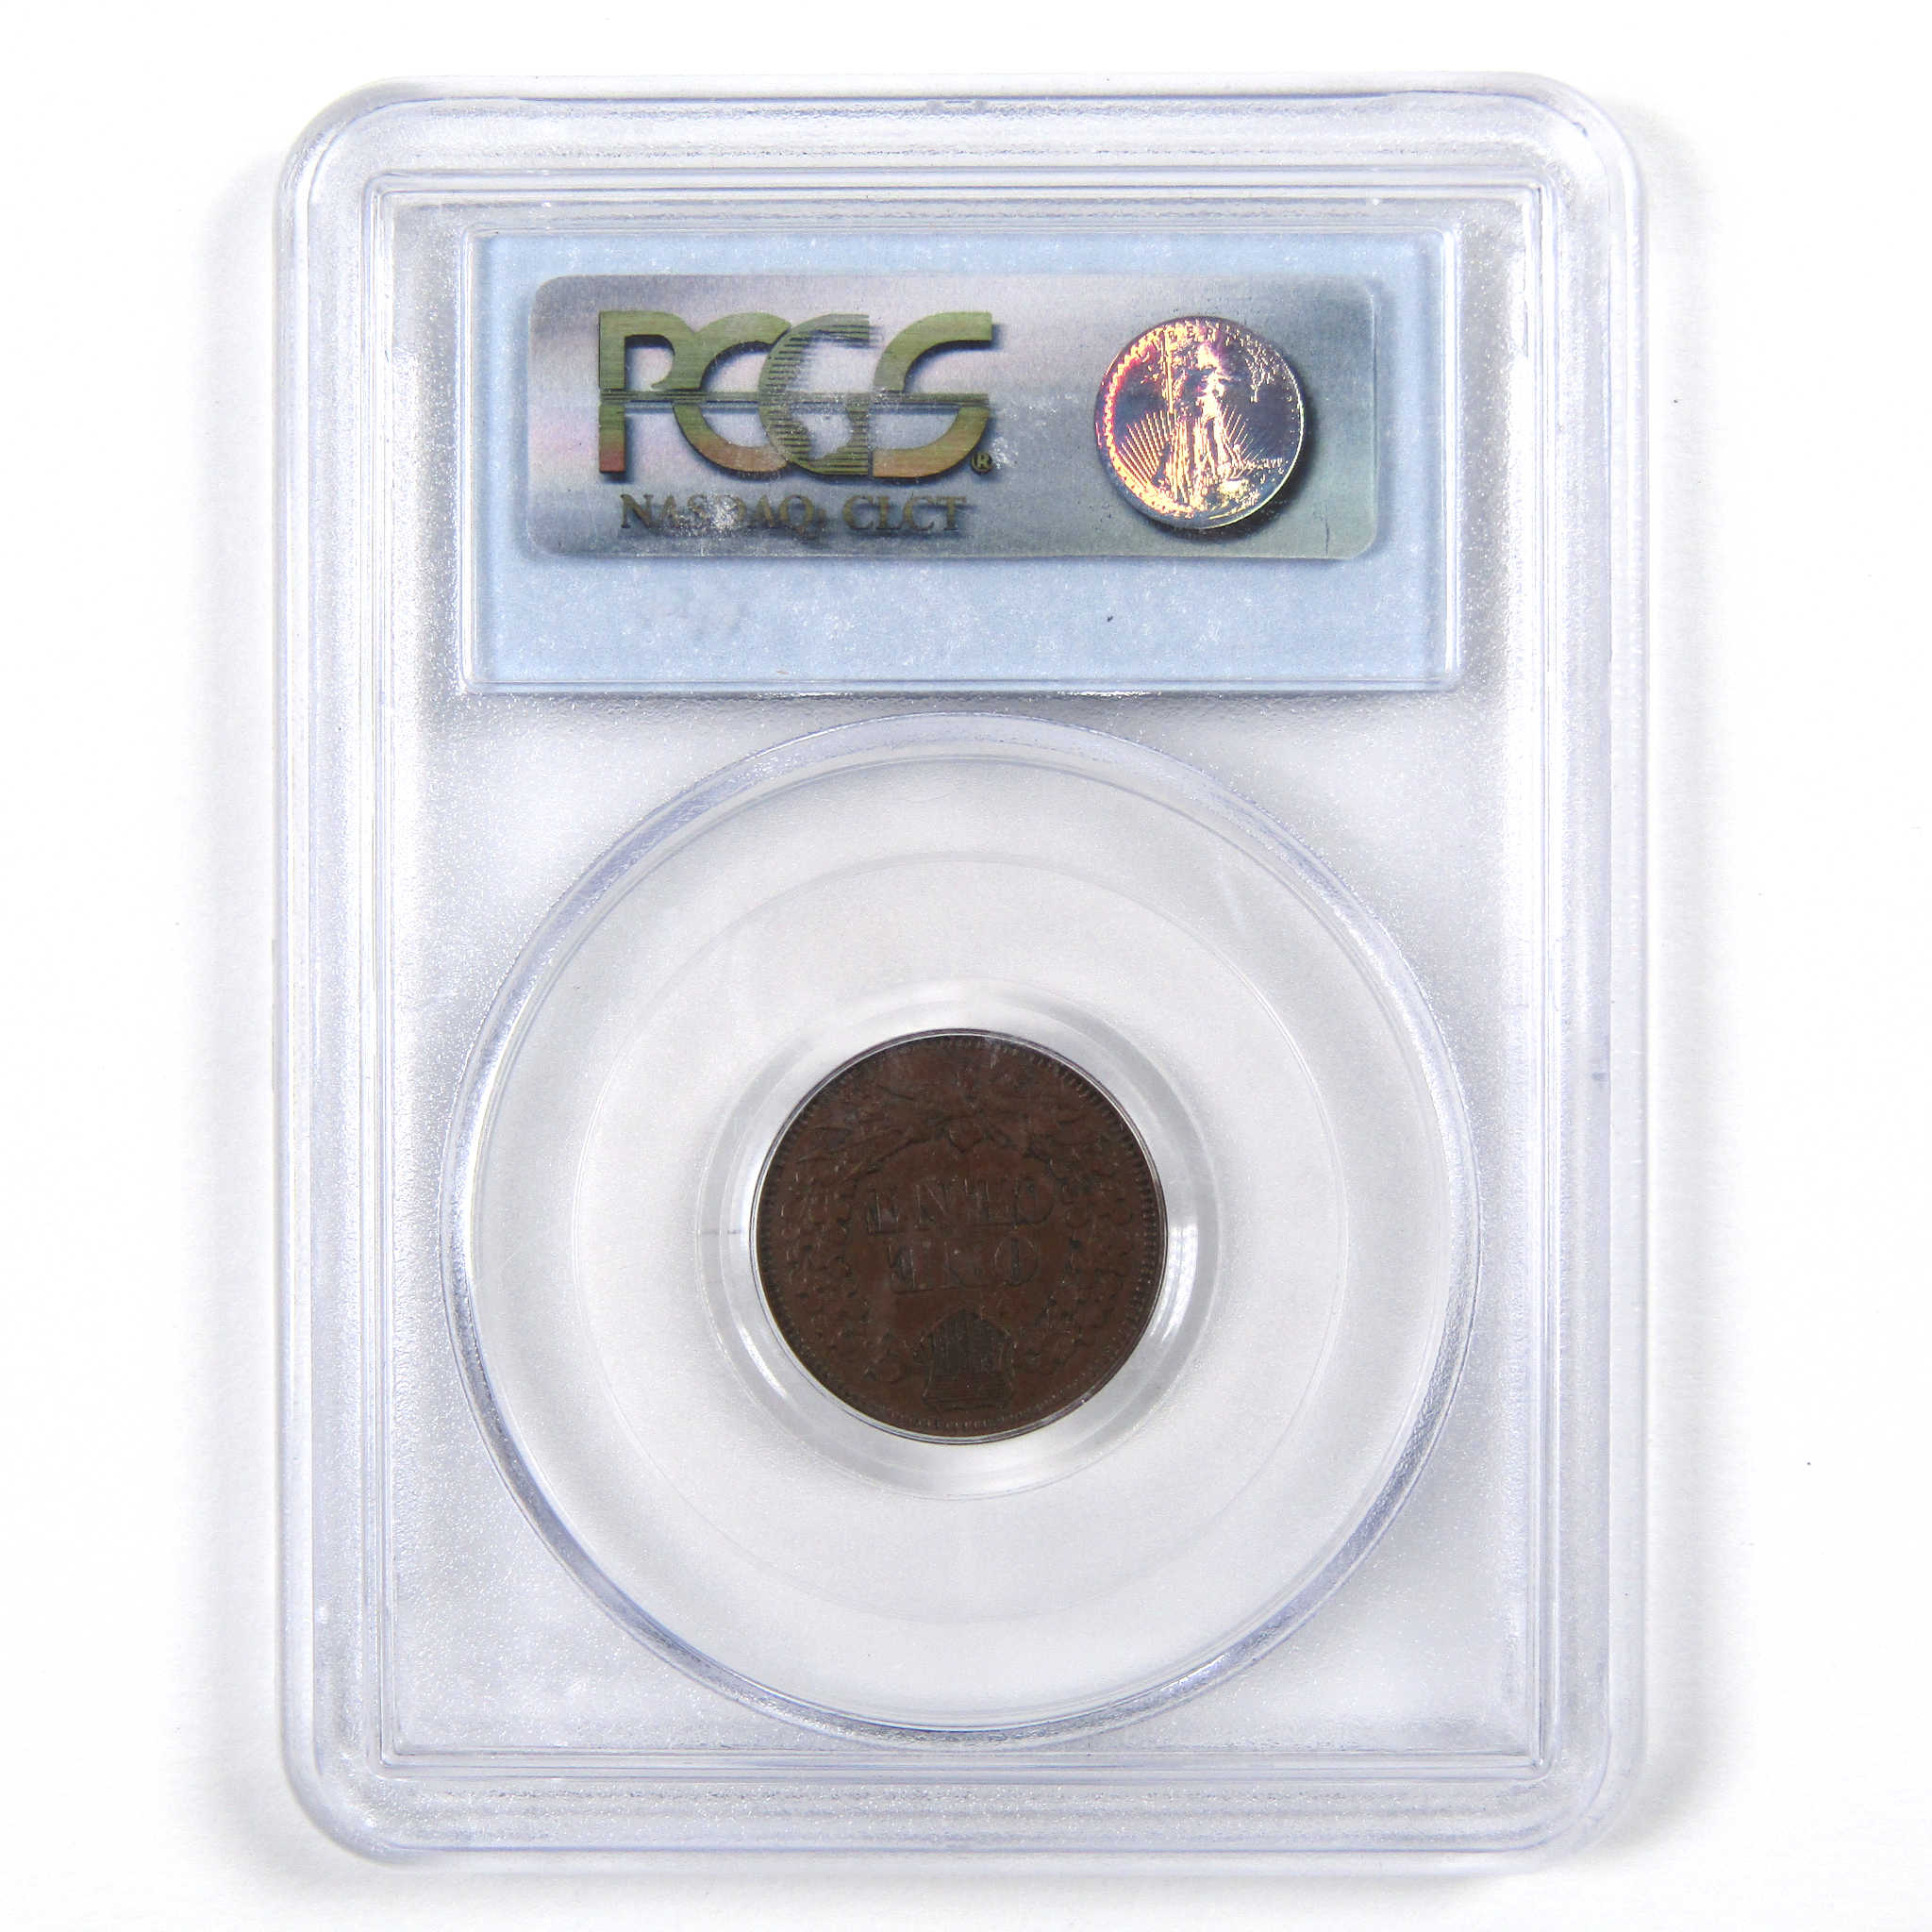 1868 Indian Head Cent AU 55 PCGS Penny 1c US Coin SKU:I2955